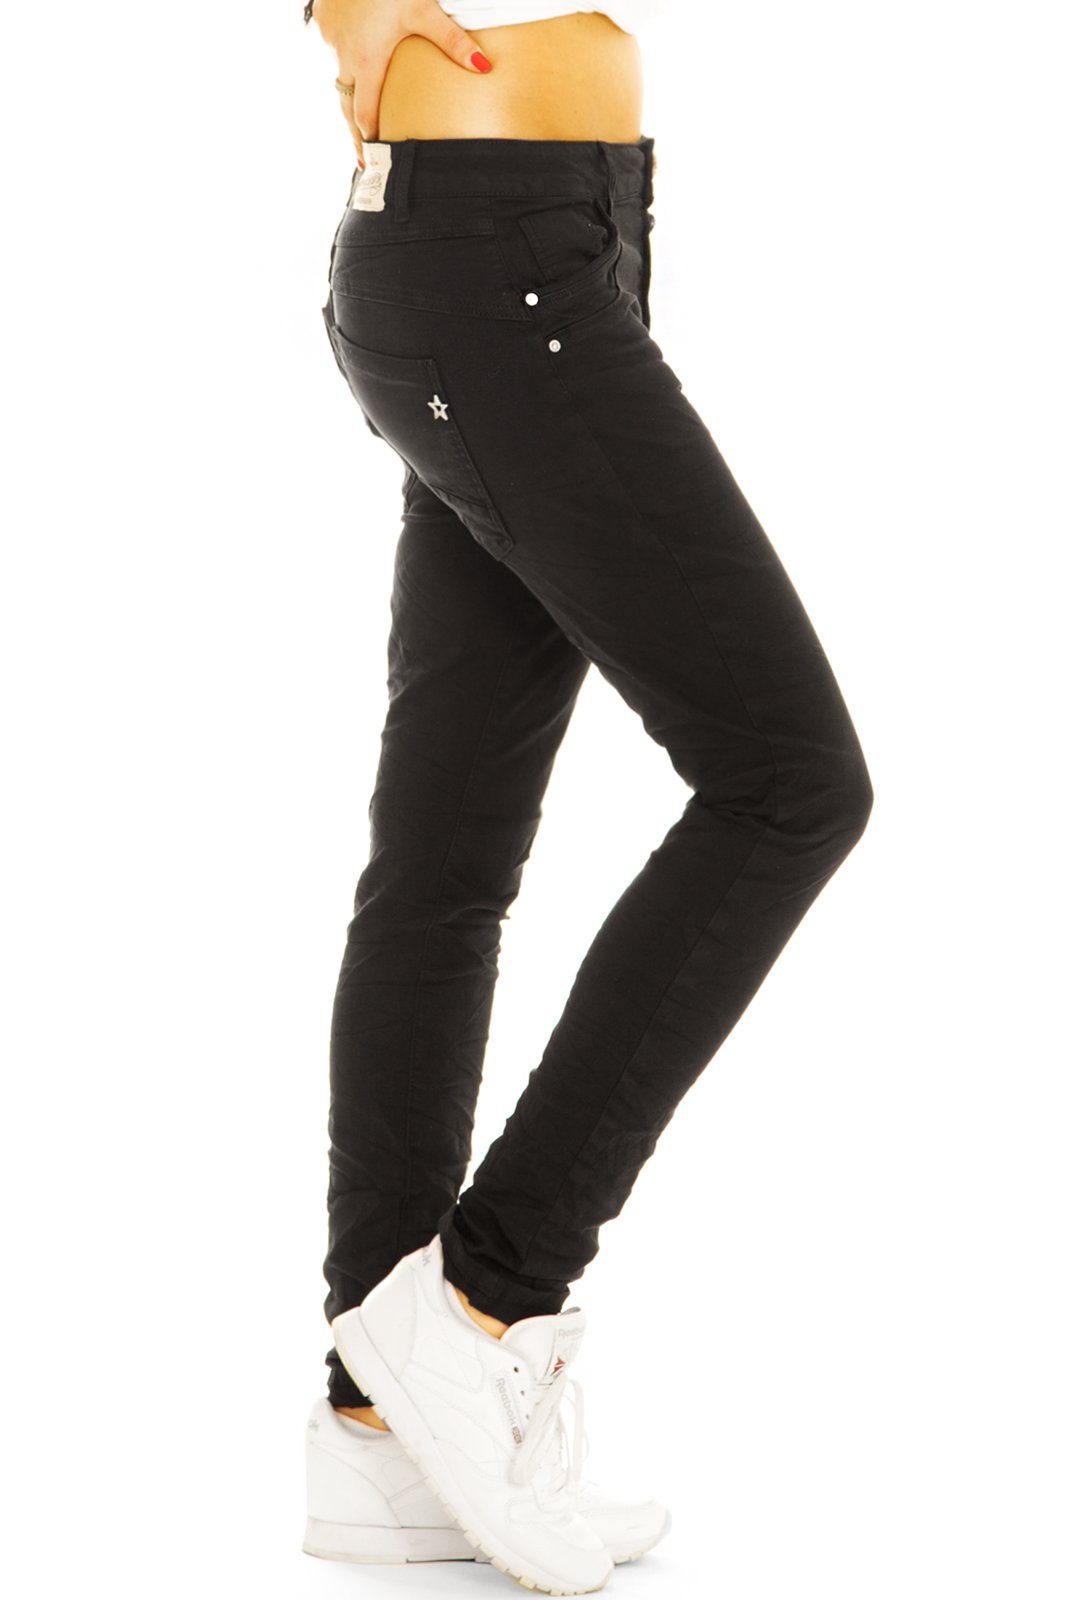 Low-rise-Jeans low Hüftjeans Hose be low rise hftig, j43l-1 hüftige styled 5-Pocket-Style, Fit - Stretch-Anteil, - waist, Slim Waist mit Low Damen Röhrenjeans